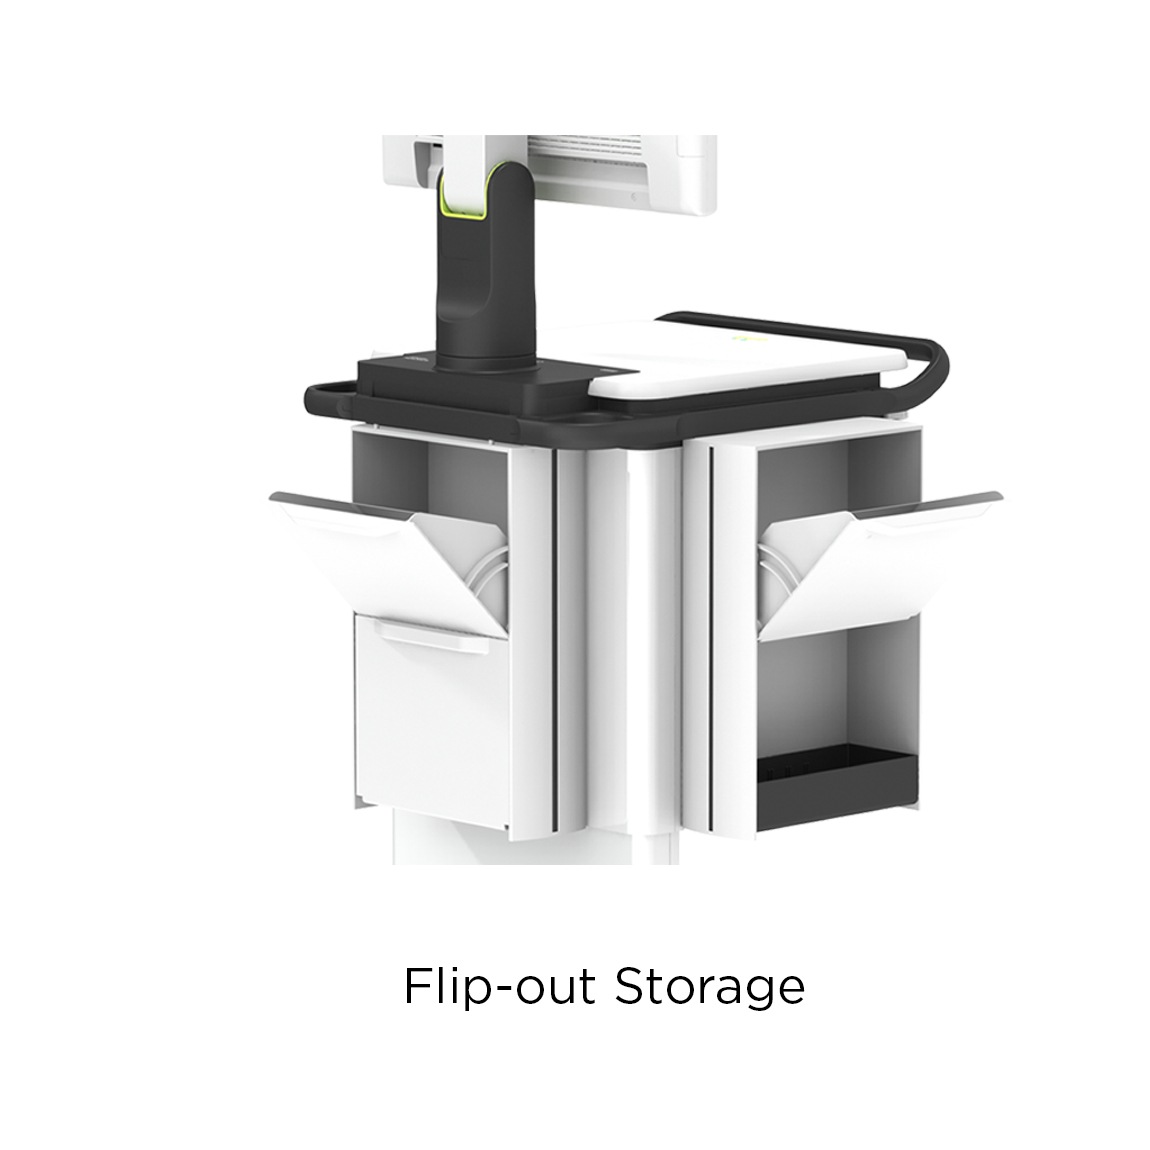 Flip-out Storage